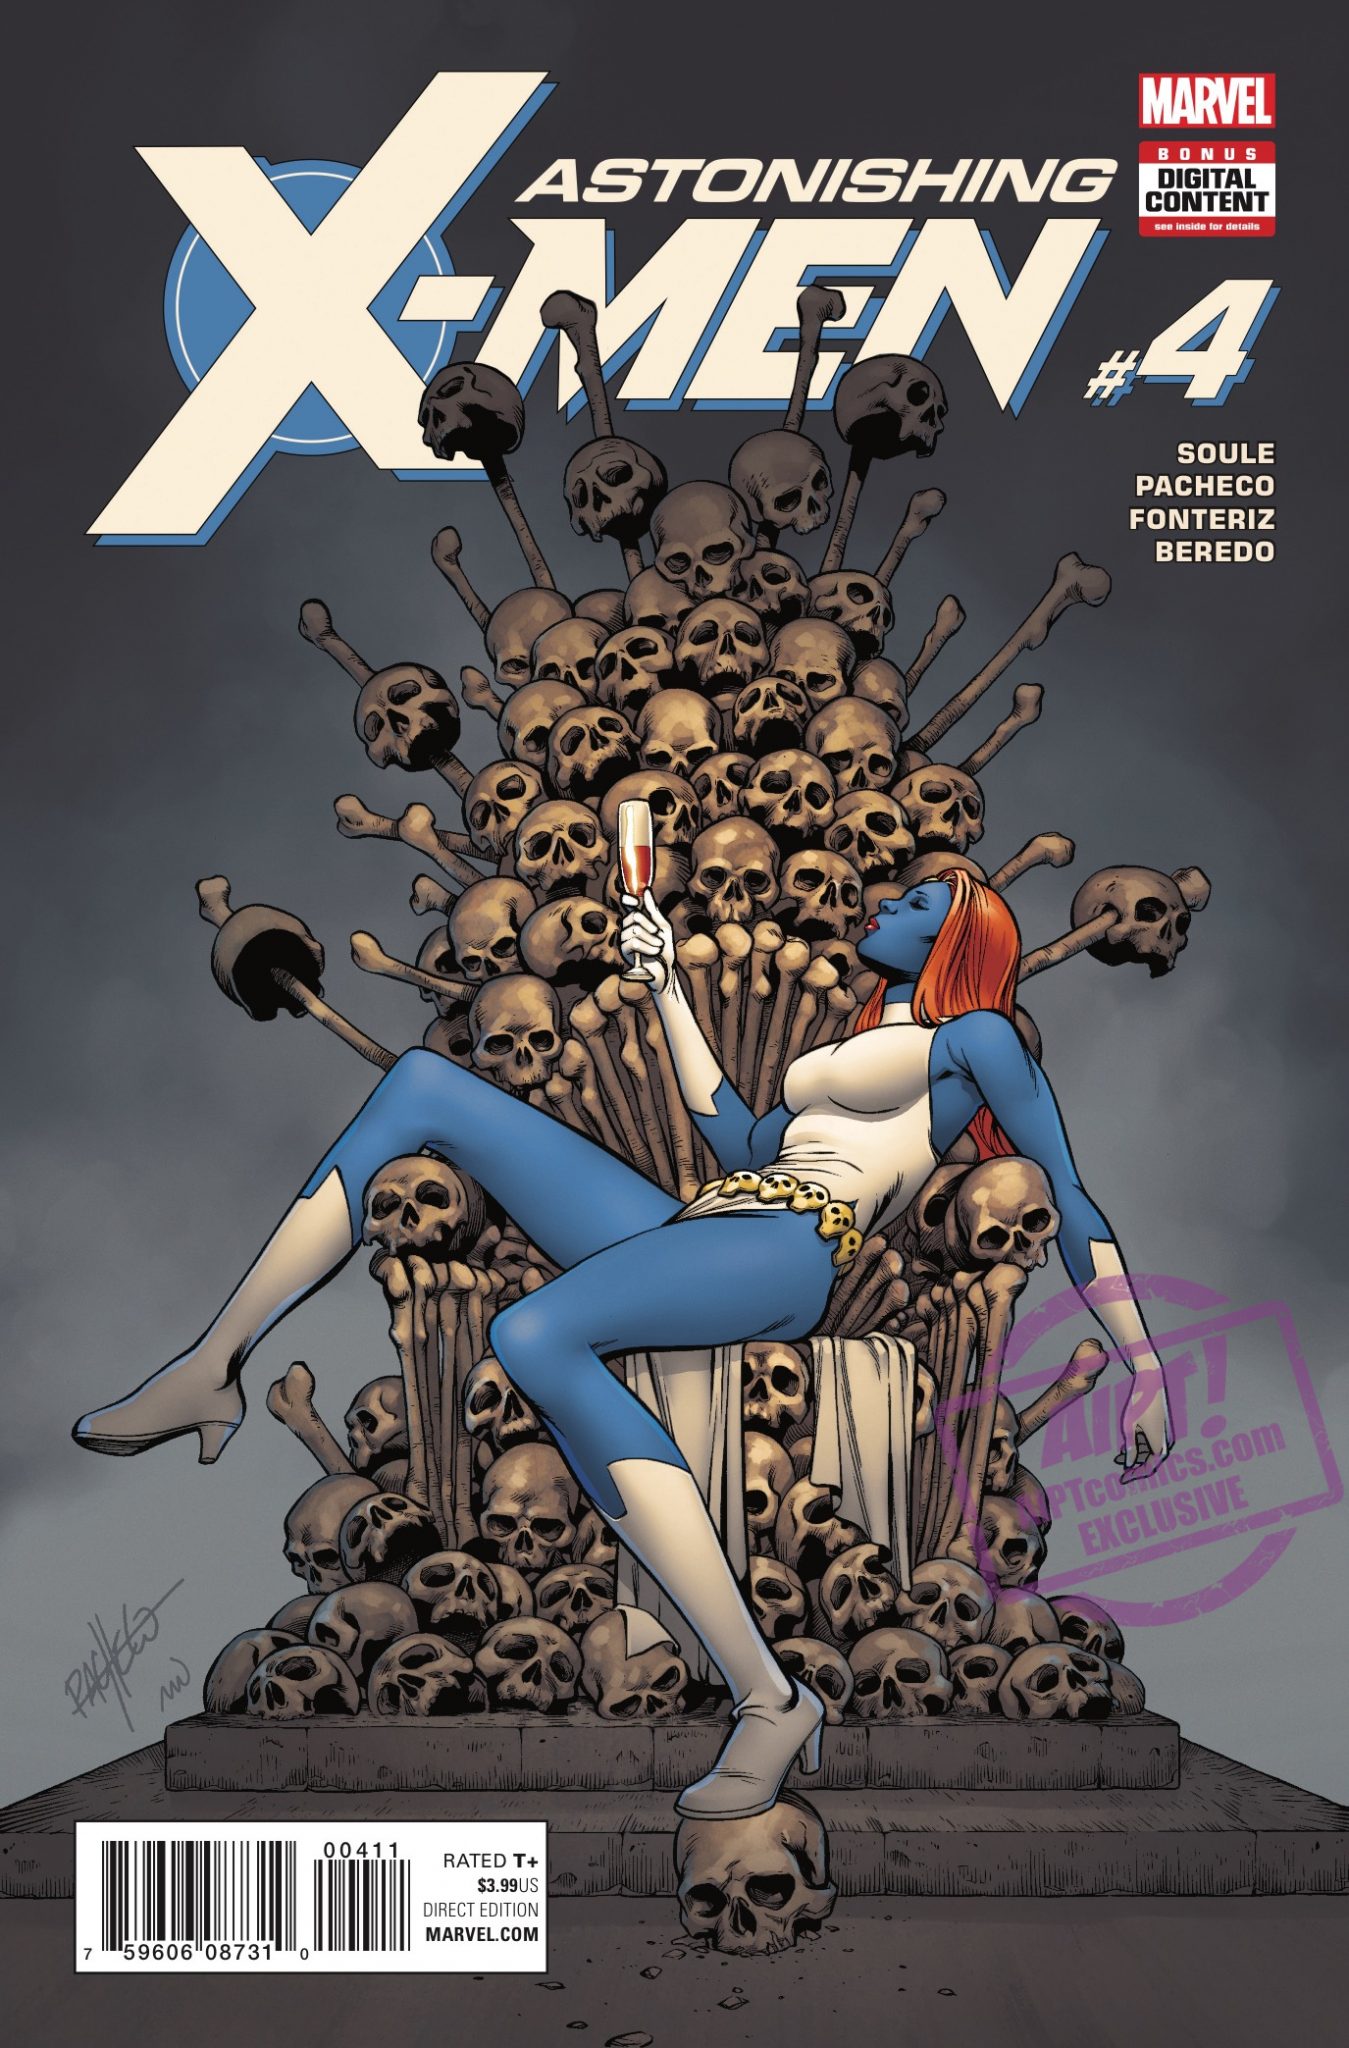 Astonishing X-Men #4 Review